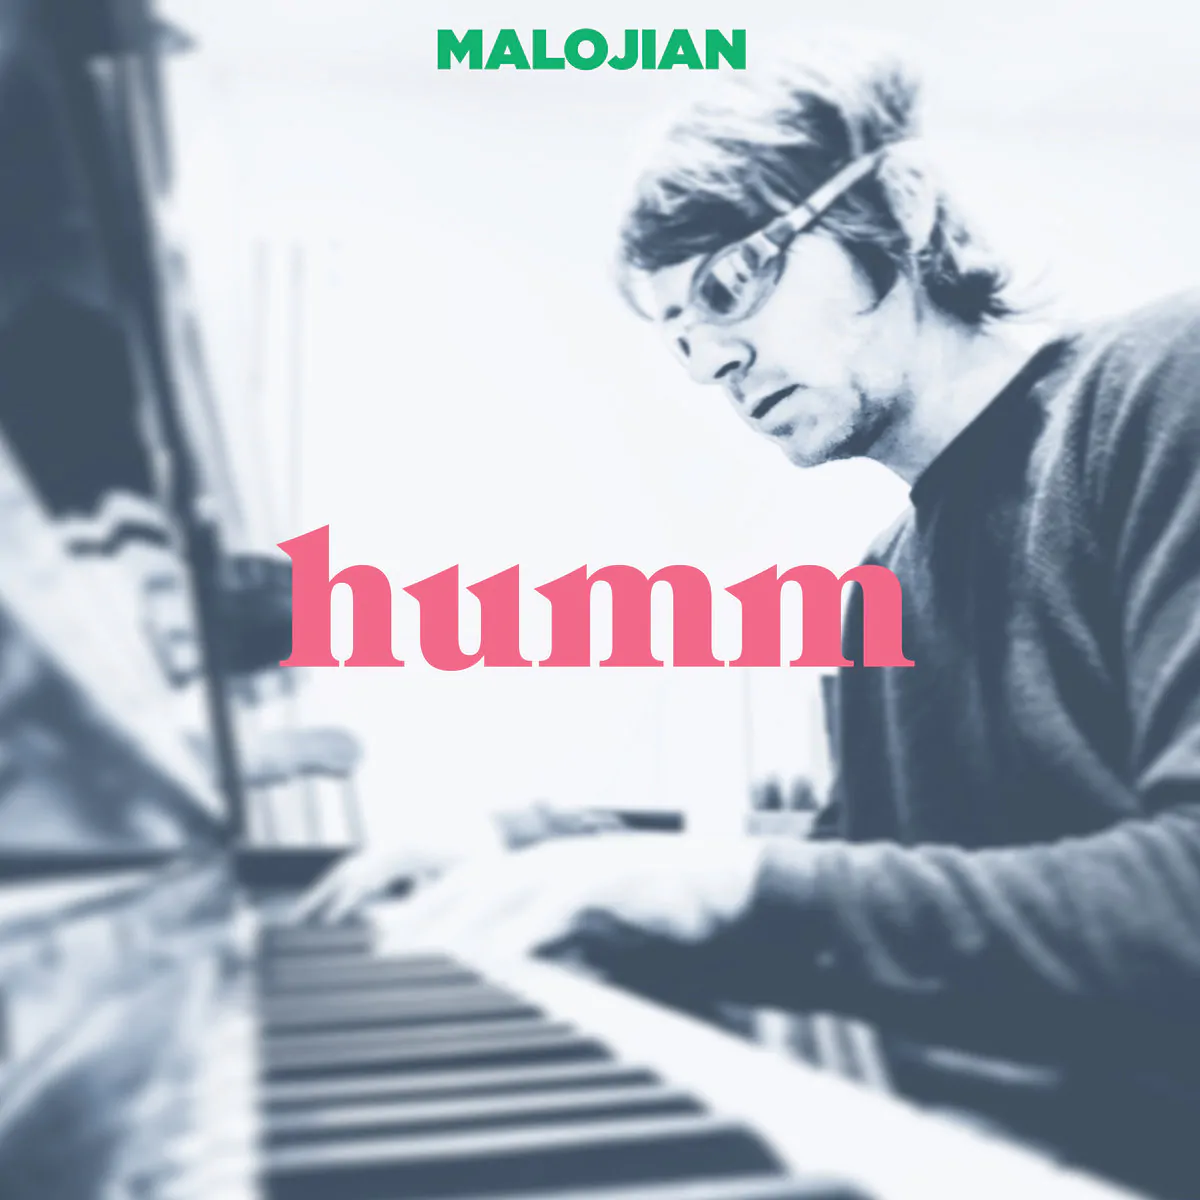 ALBUM REVIEW: Malojian – Humm